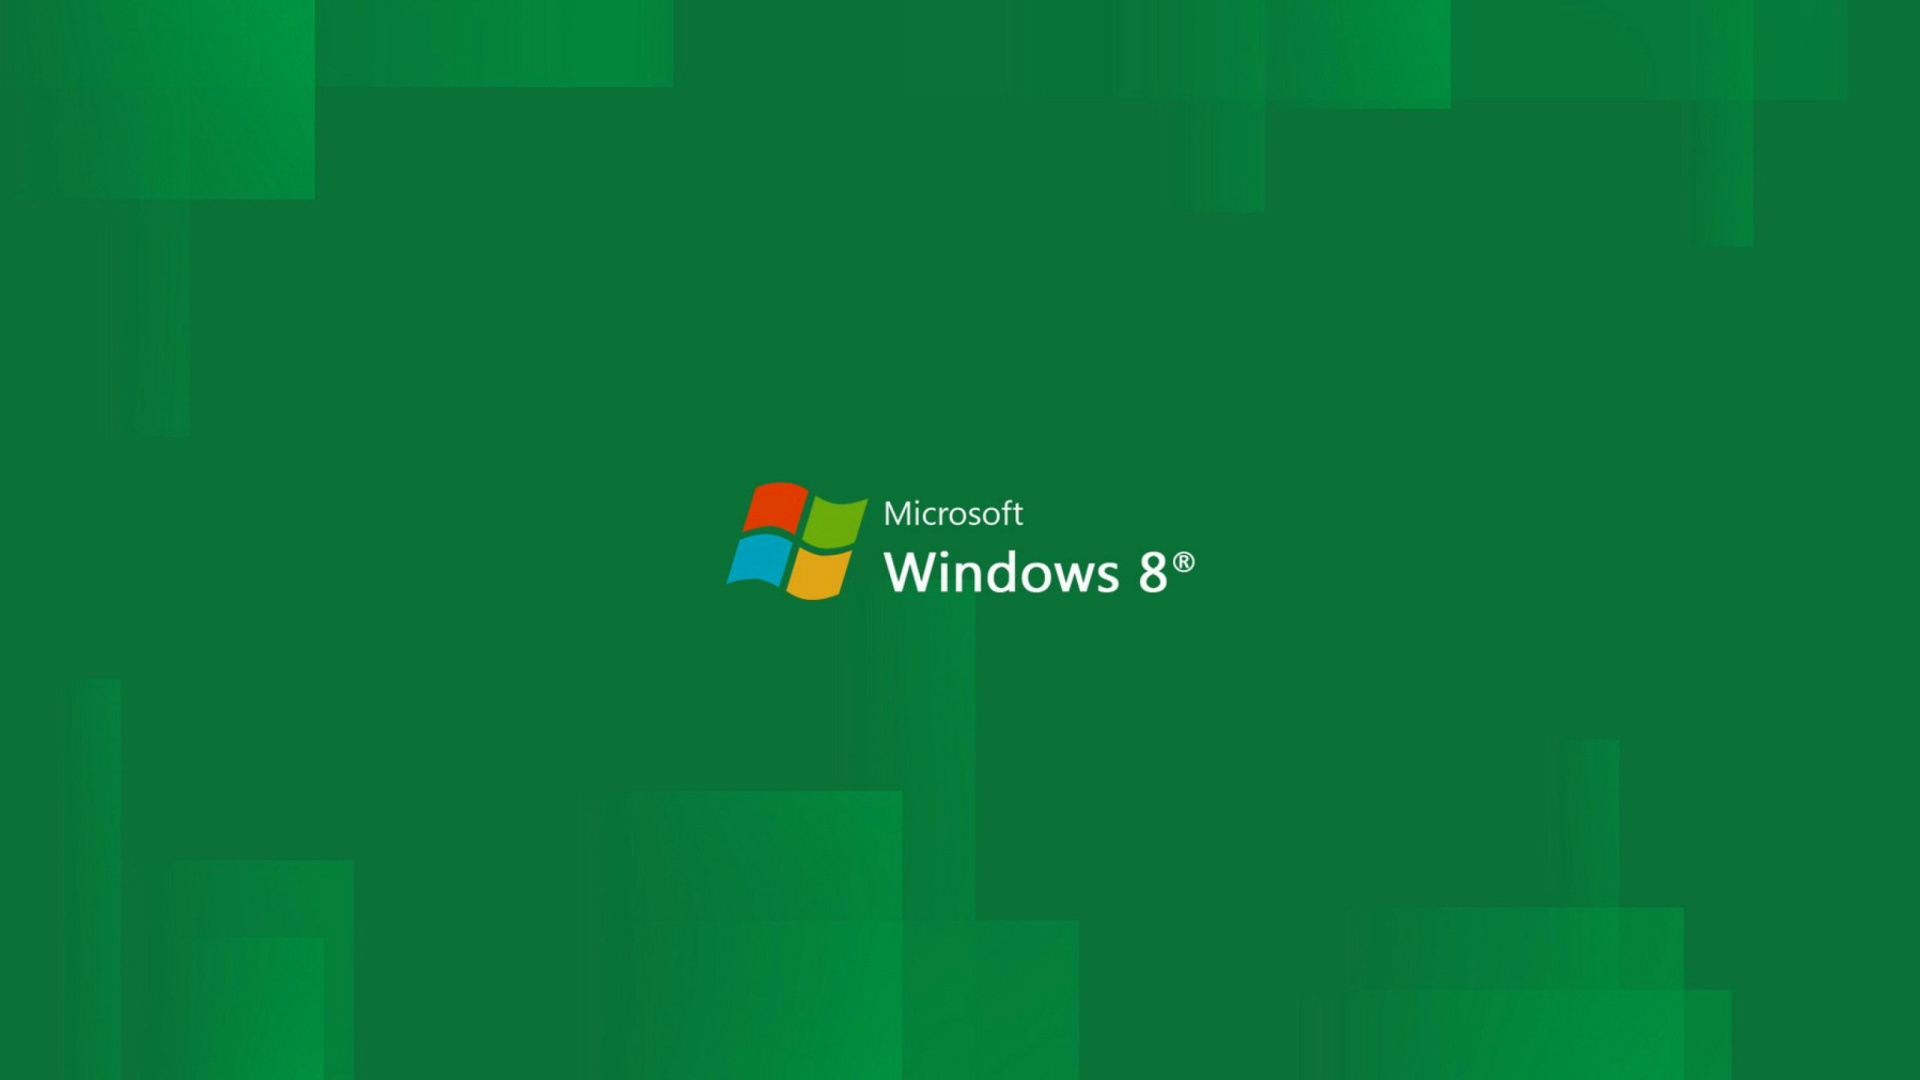 Windows 8 Wallpaper for Desktop 1920x1080 Full HD
 Full Hd Wallpapers For Windows 8 1920x1080